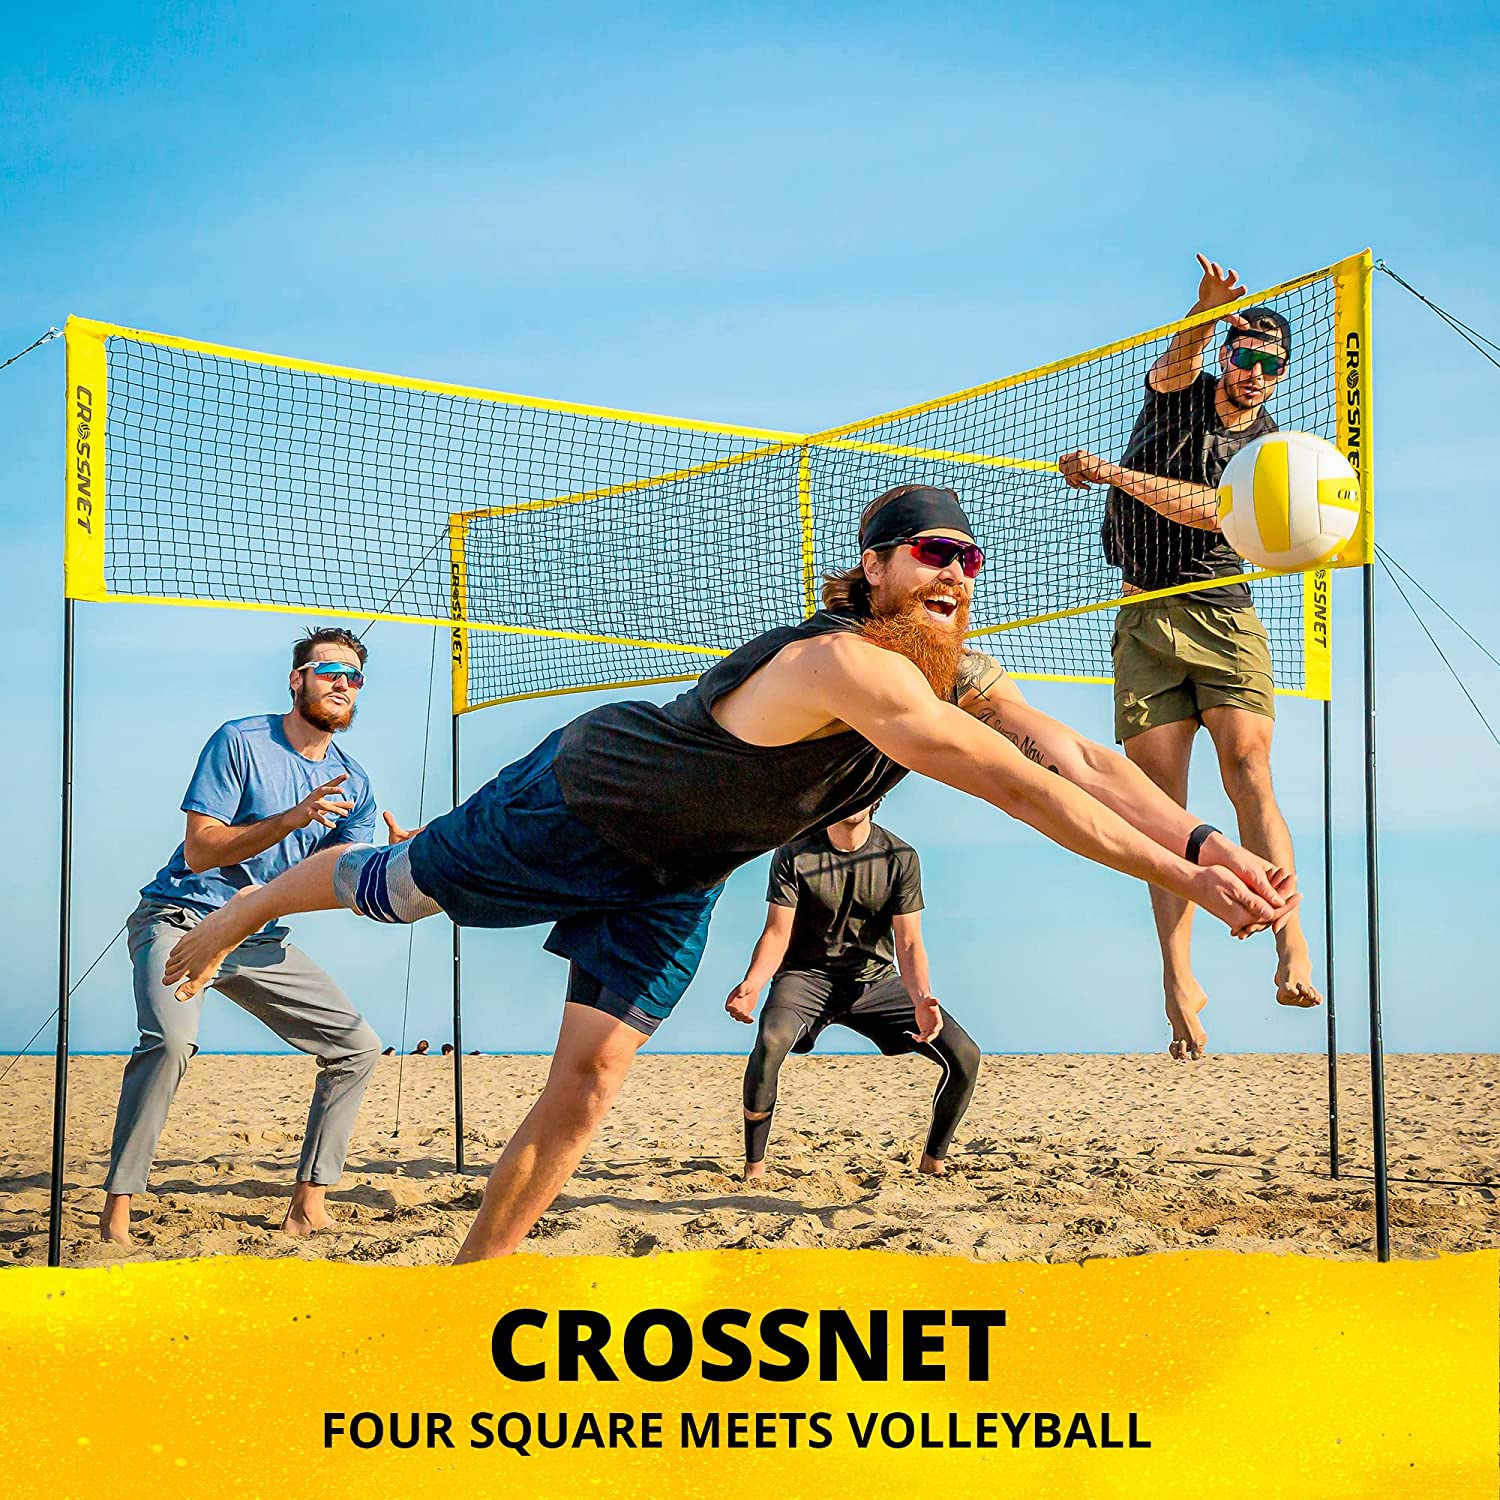 Cross Volley Net™